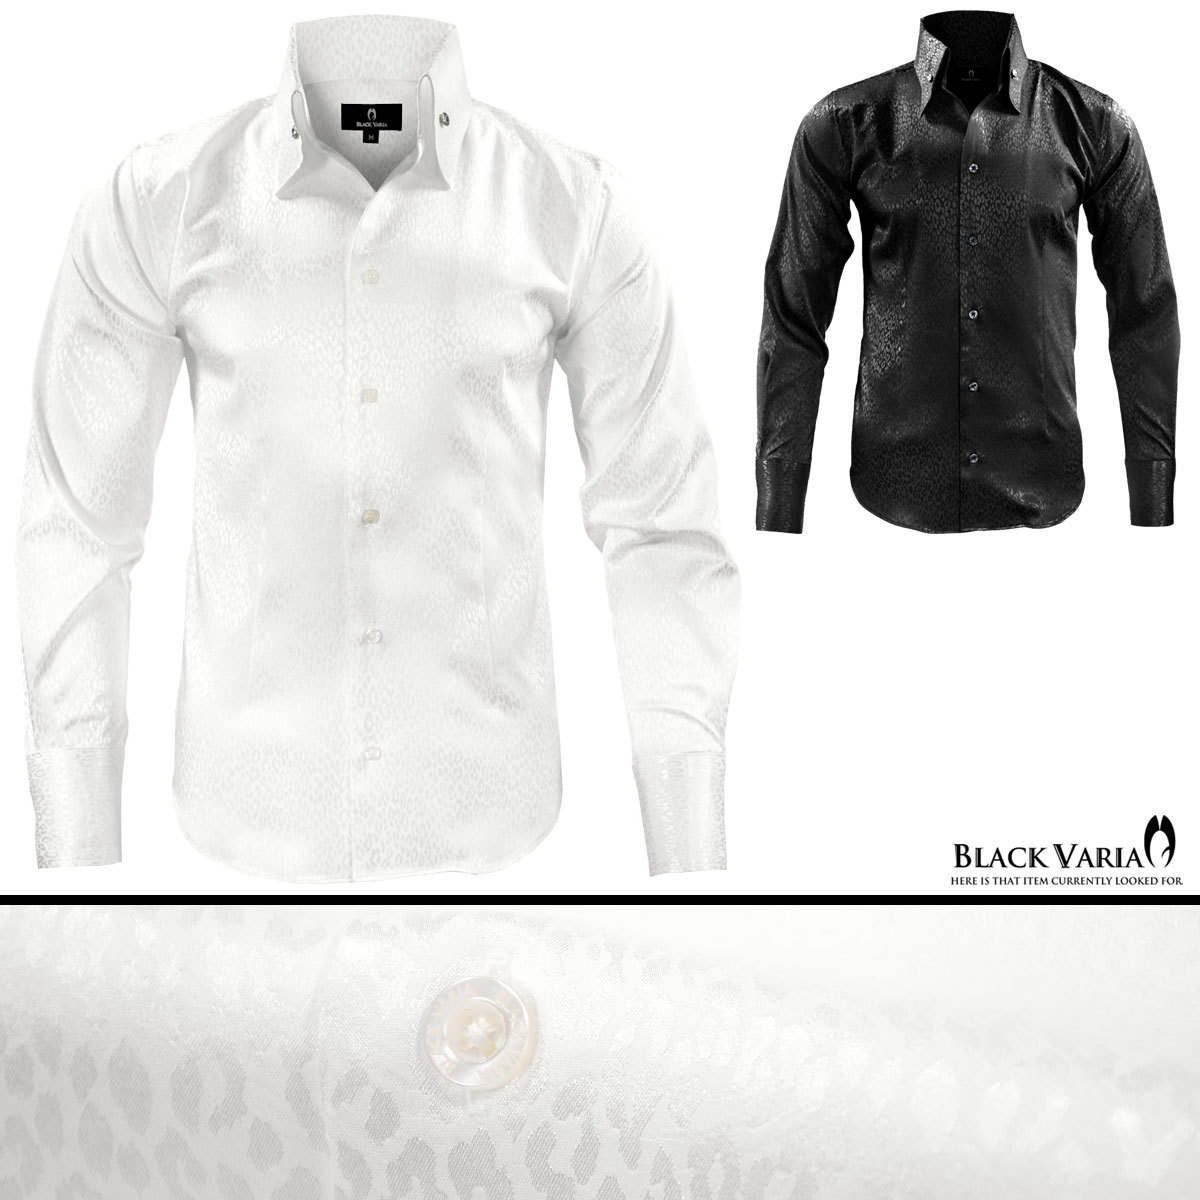 191853-wh BLACK VARIA ヒョウ豹 レオパード柄 スキッパー クリスタルボタン ドレスシャツ メンズ(ホワイト白) XL パーティー ステージ衣装_画像4